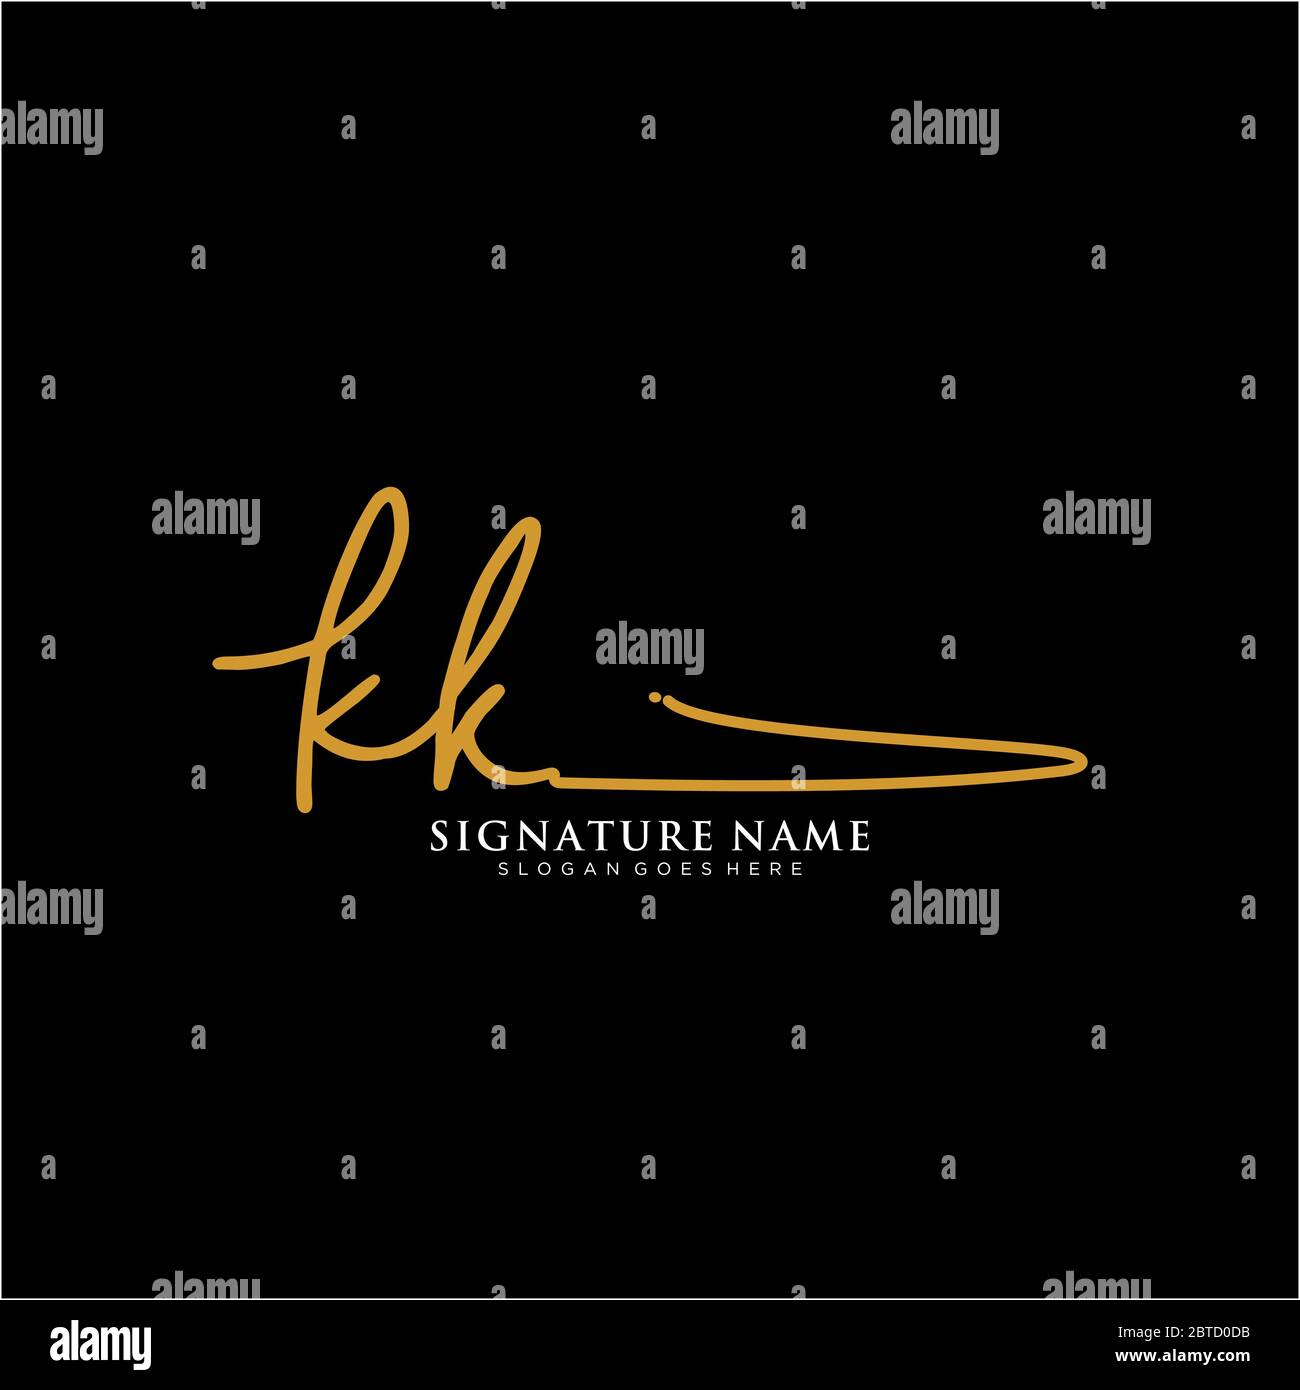 Kk signature Stock Vector Images - Alamy